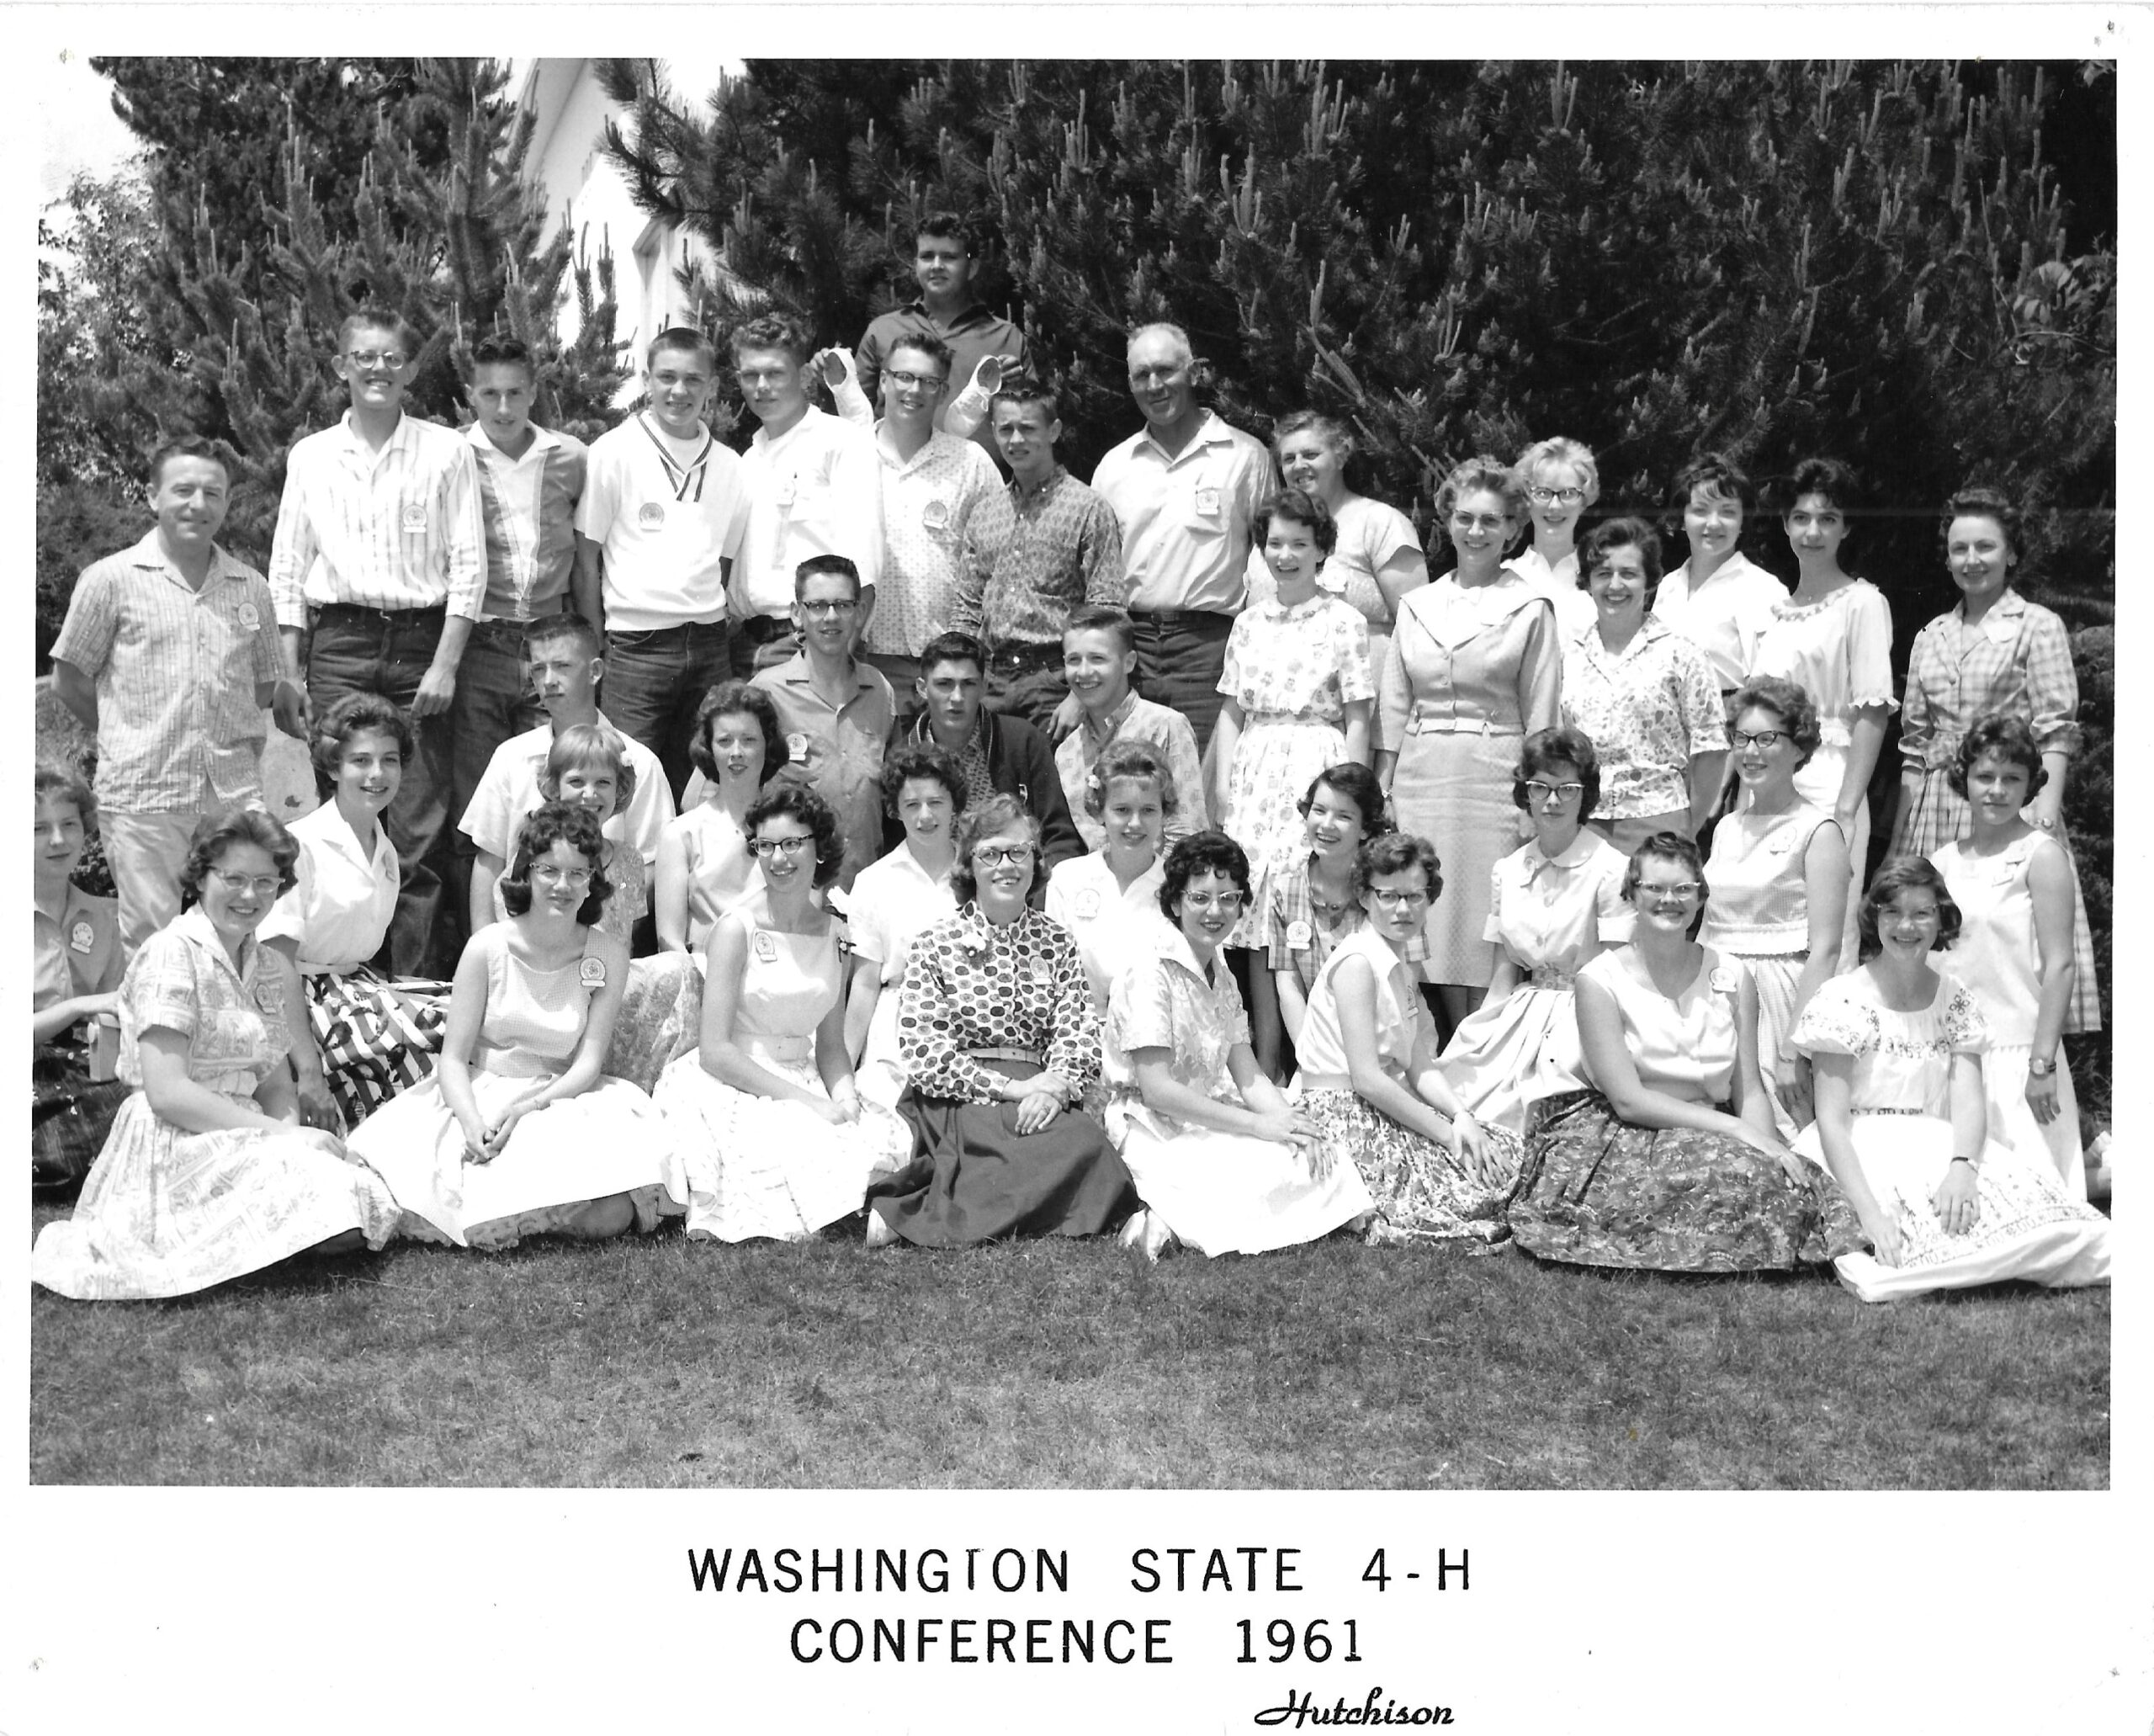 Washington State 4-H Conference 1961